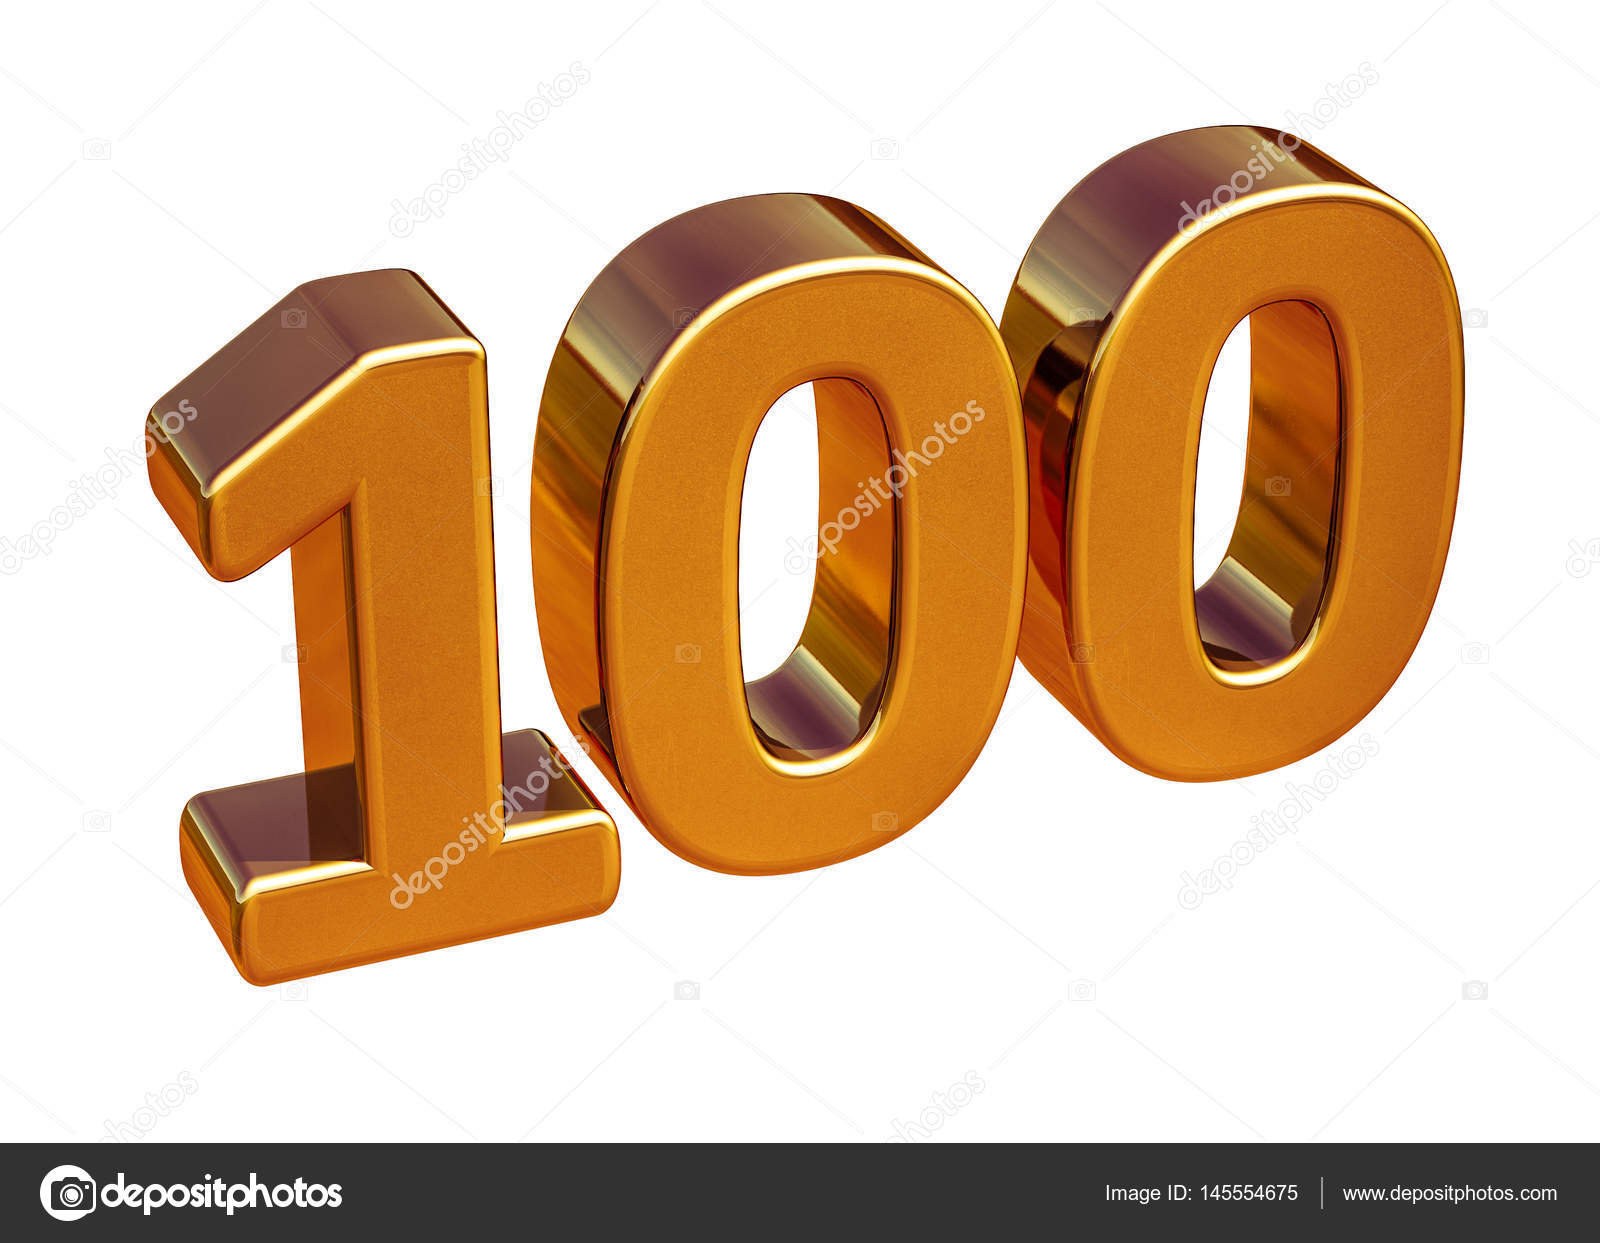 one thousand, golden number 1000,anniversary,birthday, price